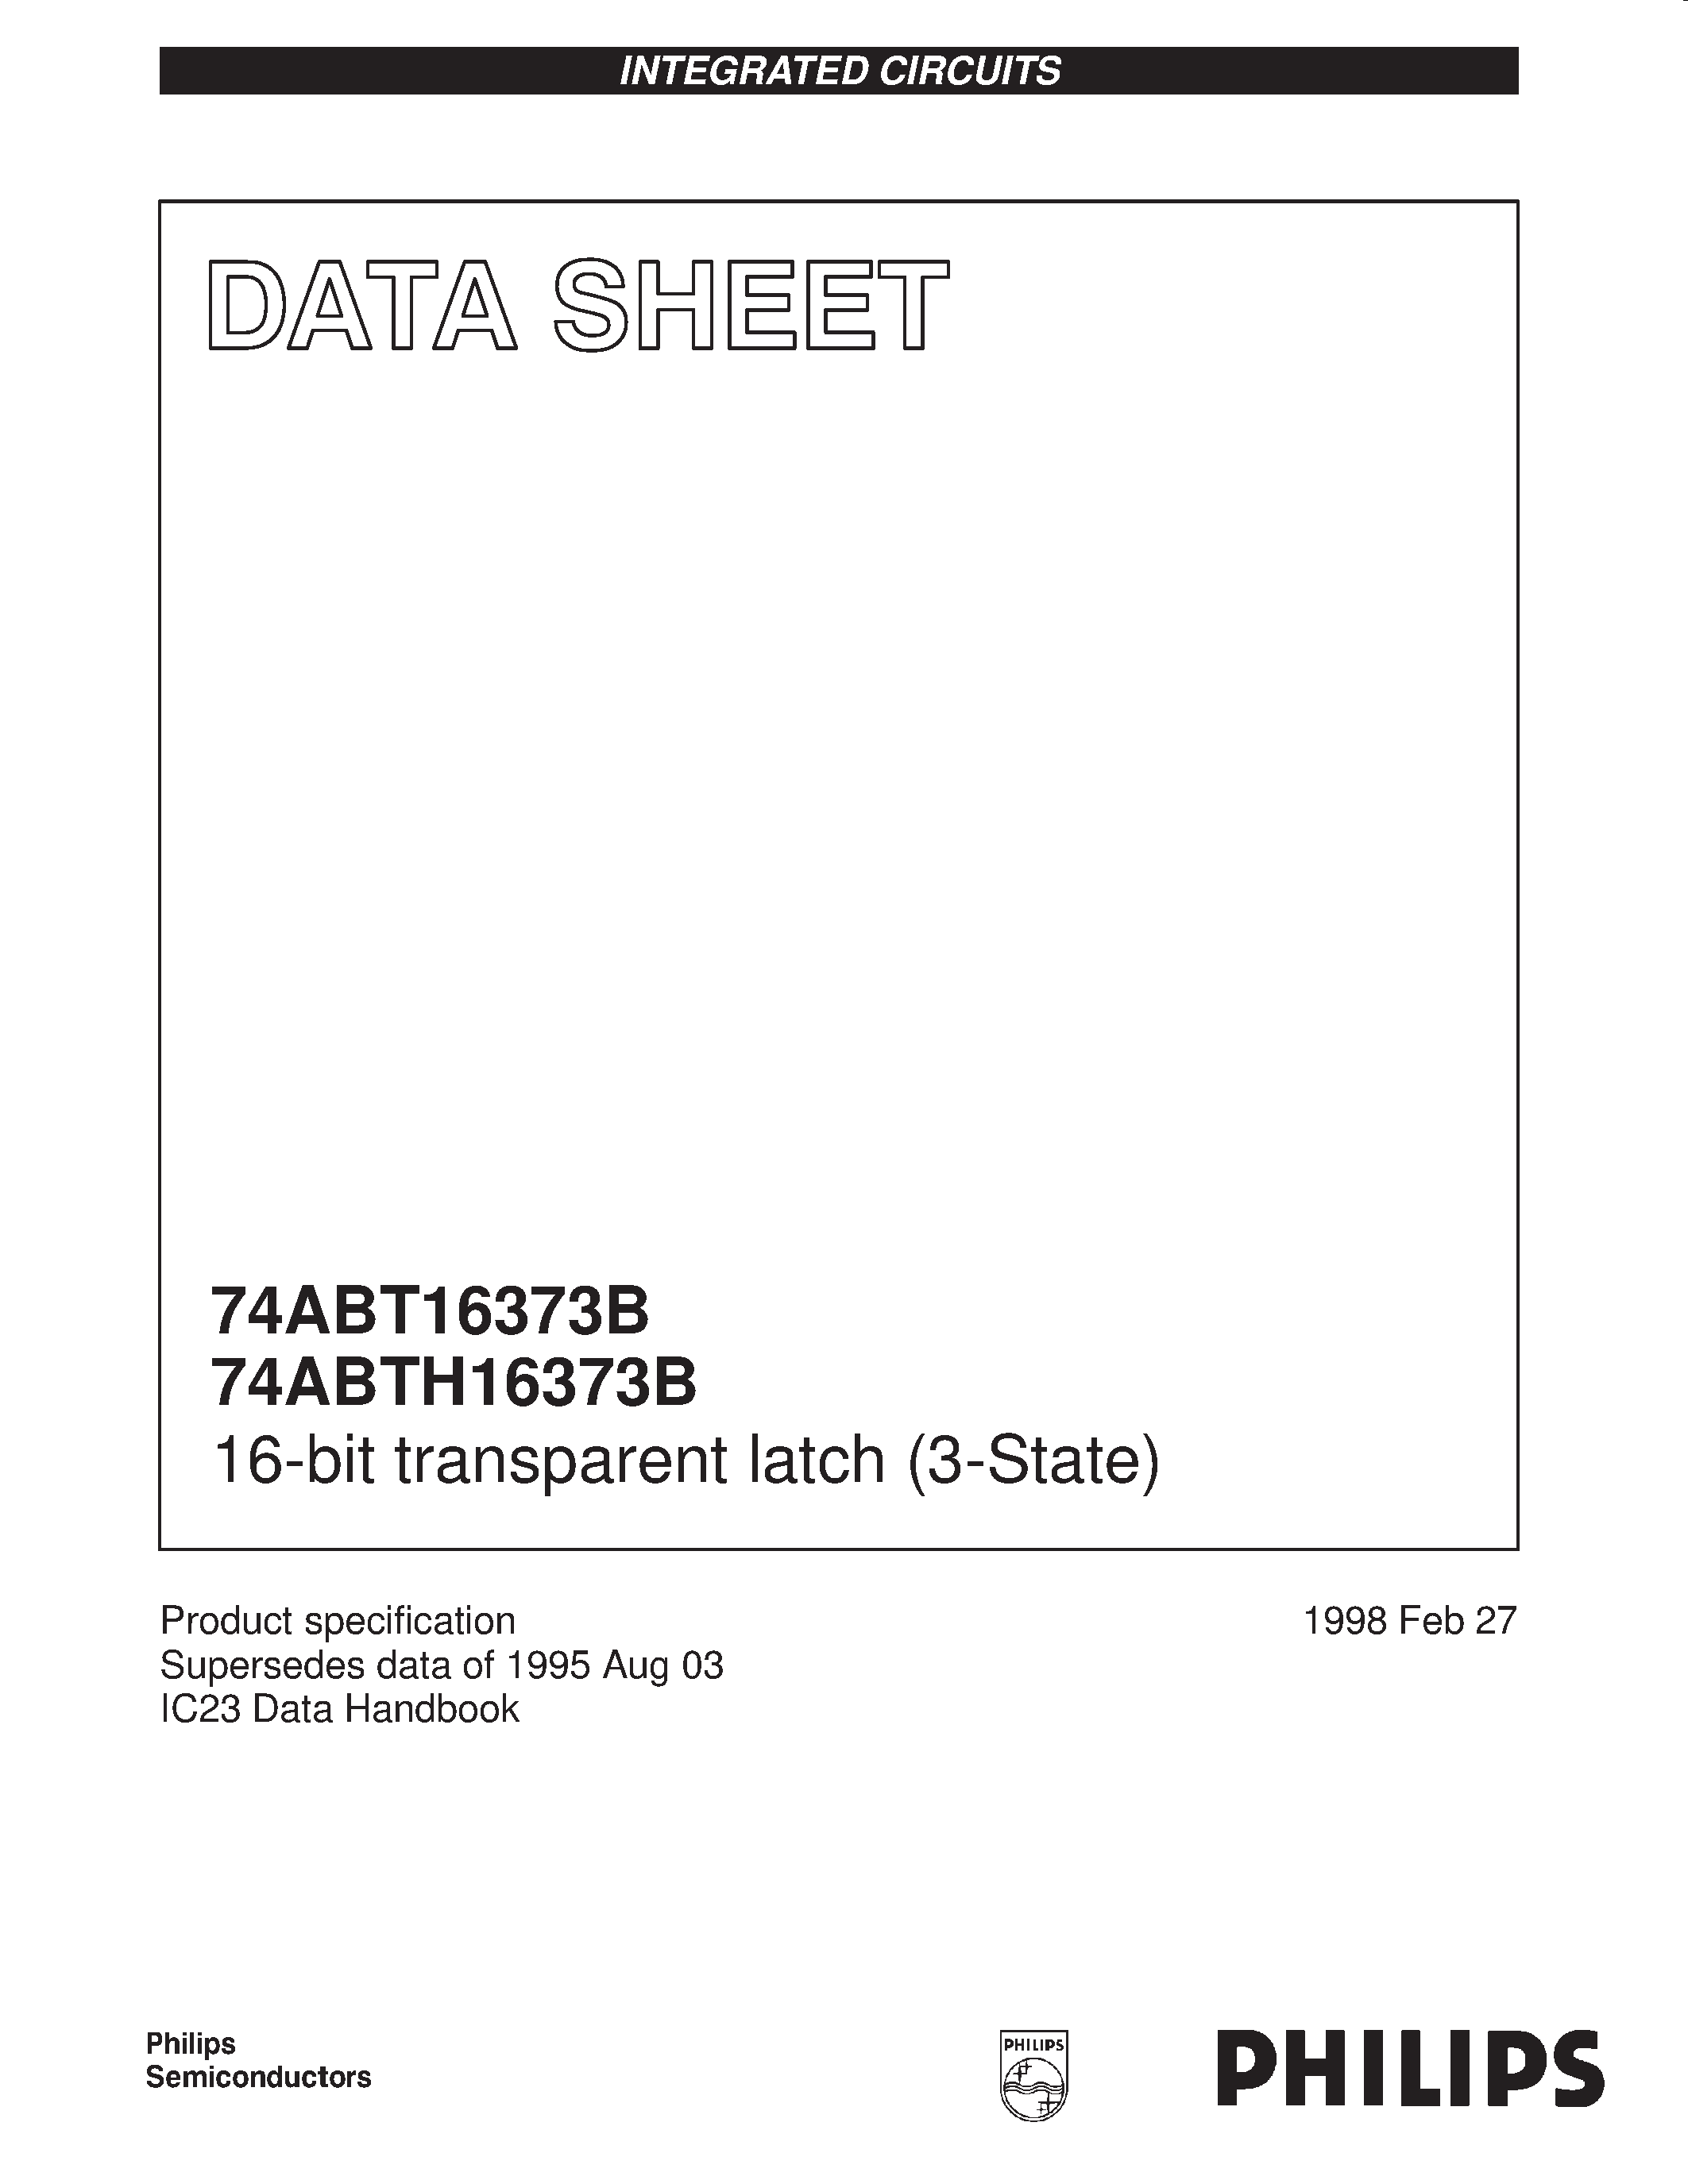 Даташит 74ABTH16373BDGG - 16-bit transparent latch 3-State страница 1